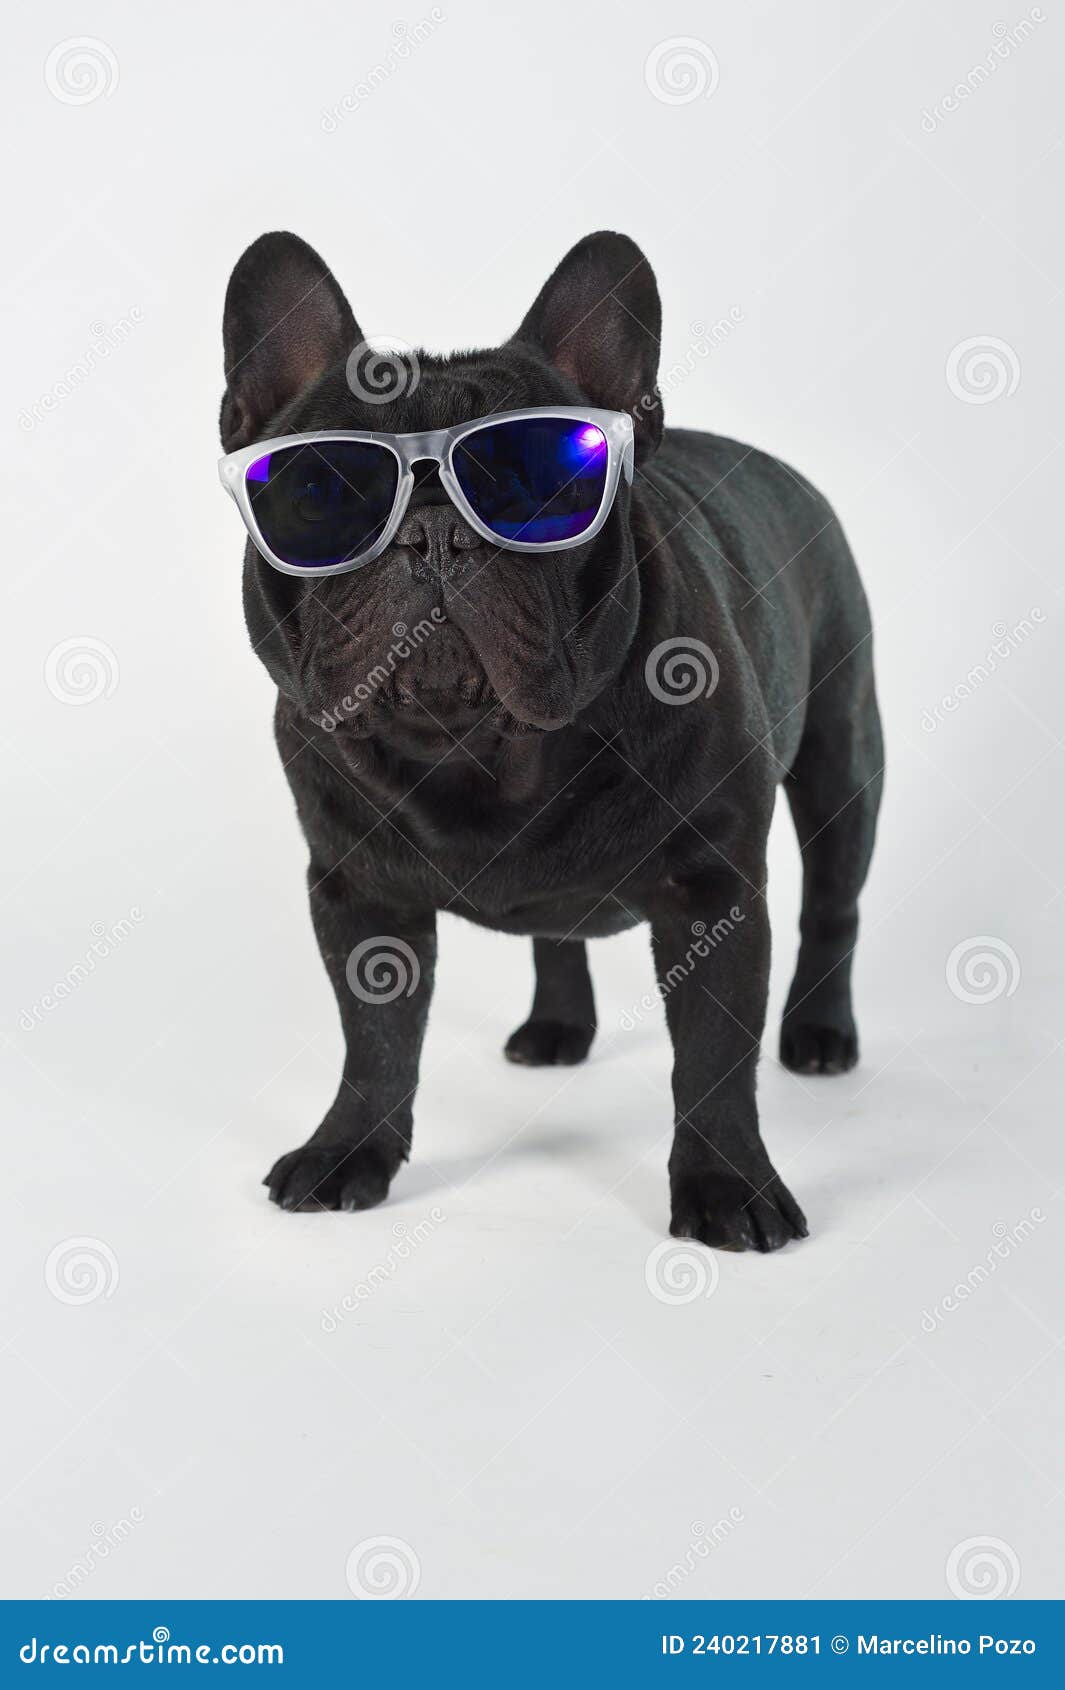 french bulldog purebred dog with sunglasses